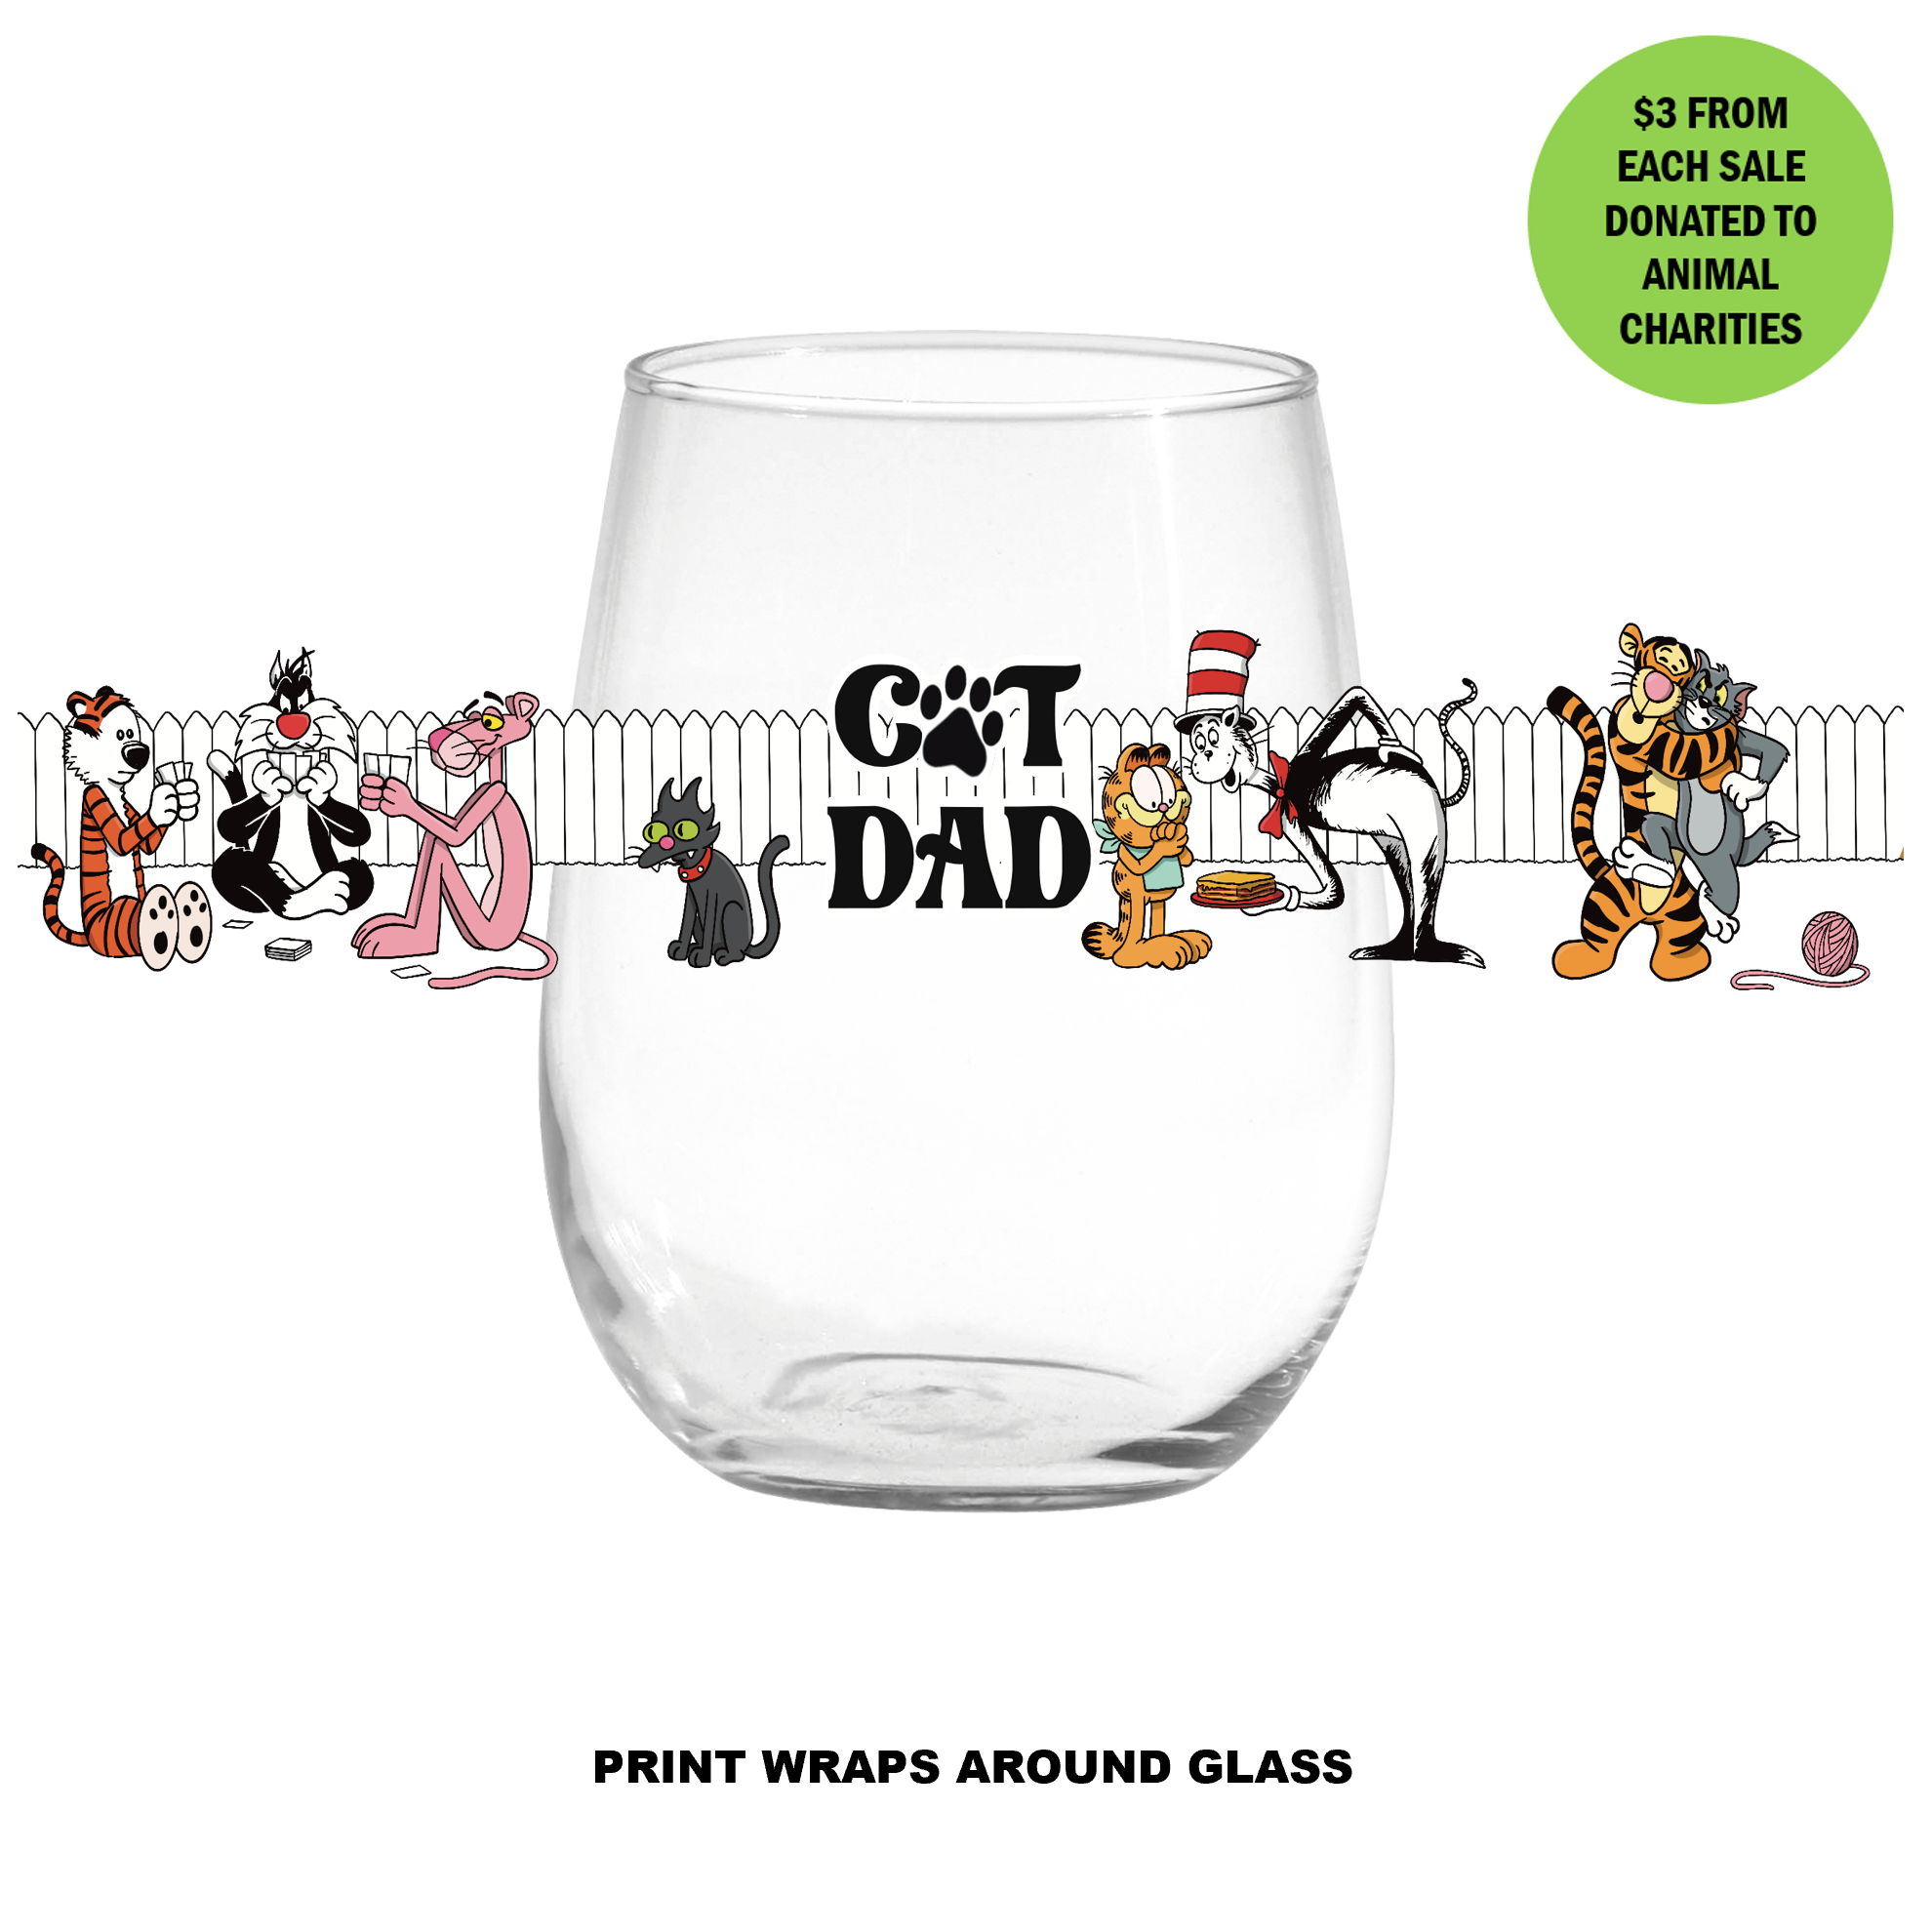 Single Product Image "Cat Dad" 16oz vina glass